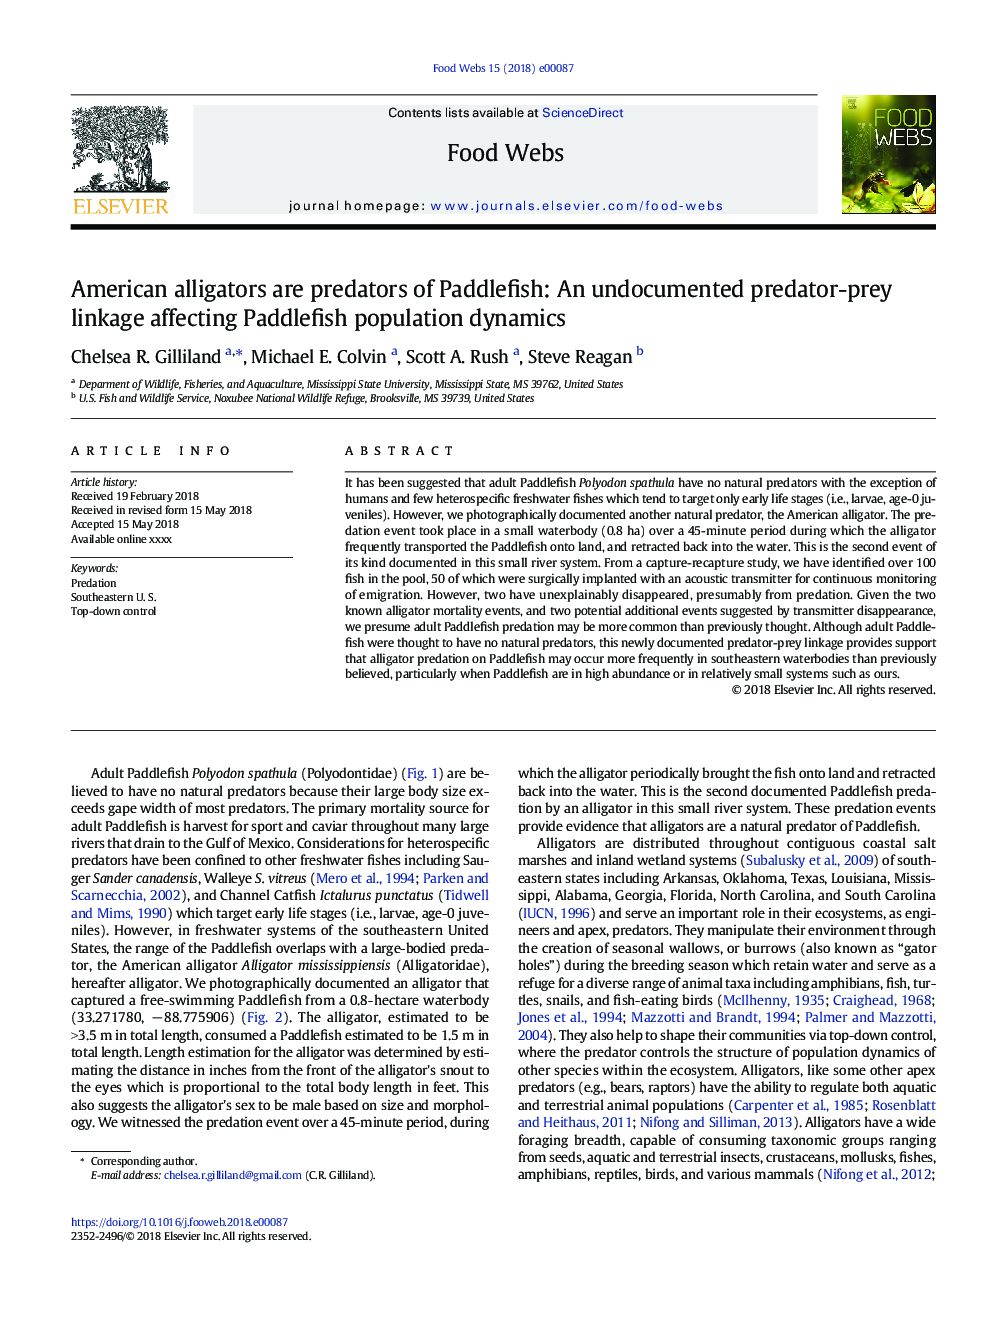 American alligators are predators of Paddlefish: An undocumented predator-prey linkage affecting Paddlefish population dynamics